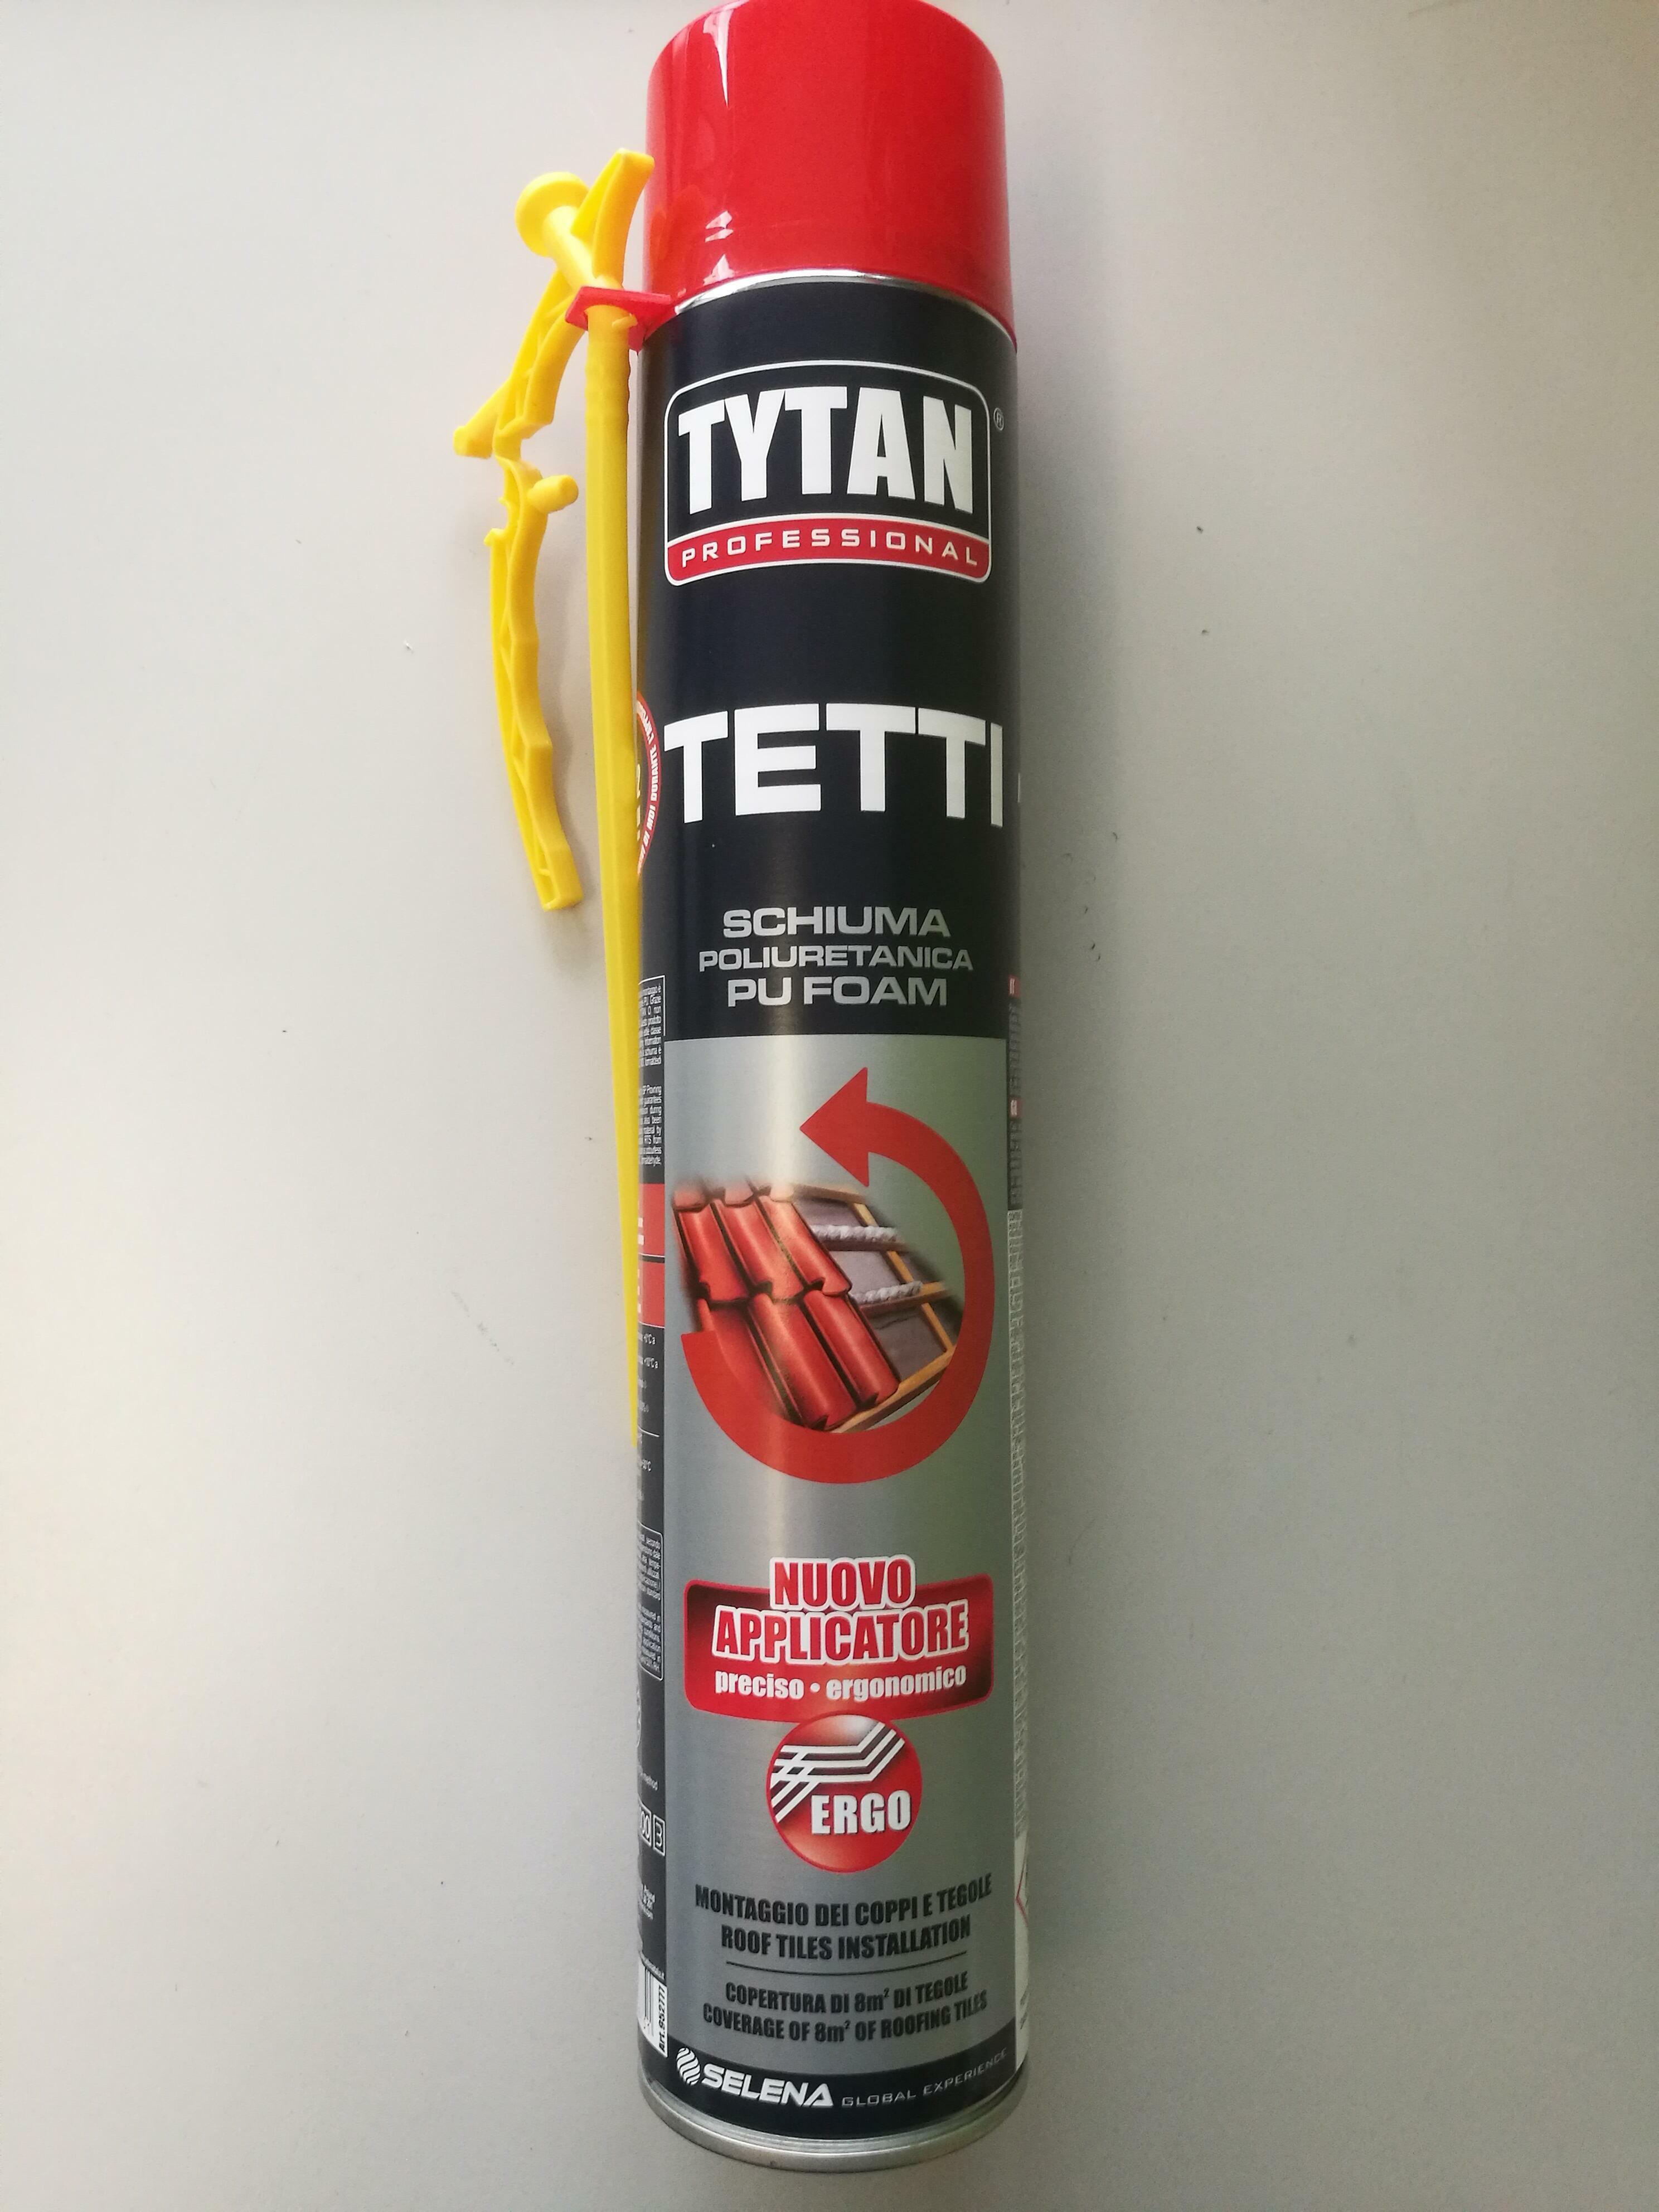 tytan professional tytan professional schiuma poliuretanica per tetti manuale 750 ml